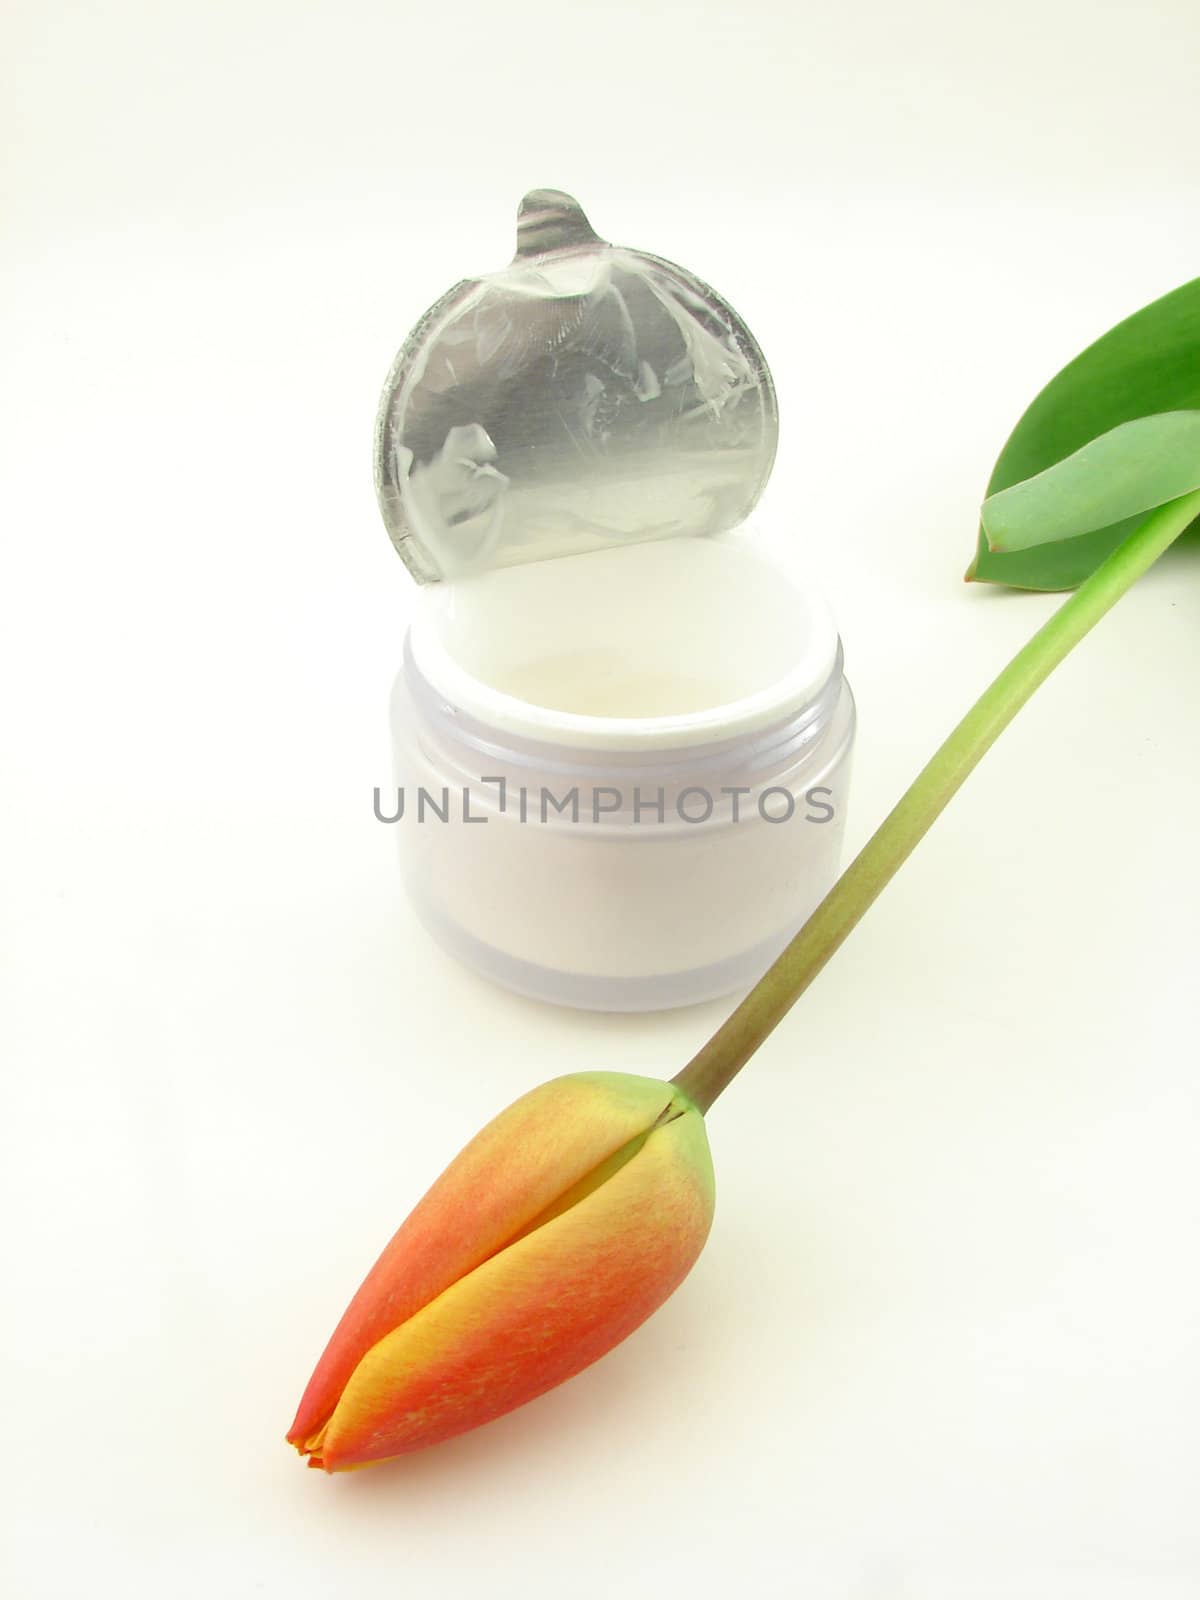 Tulip flower by morchella